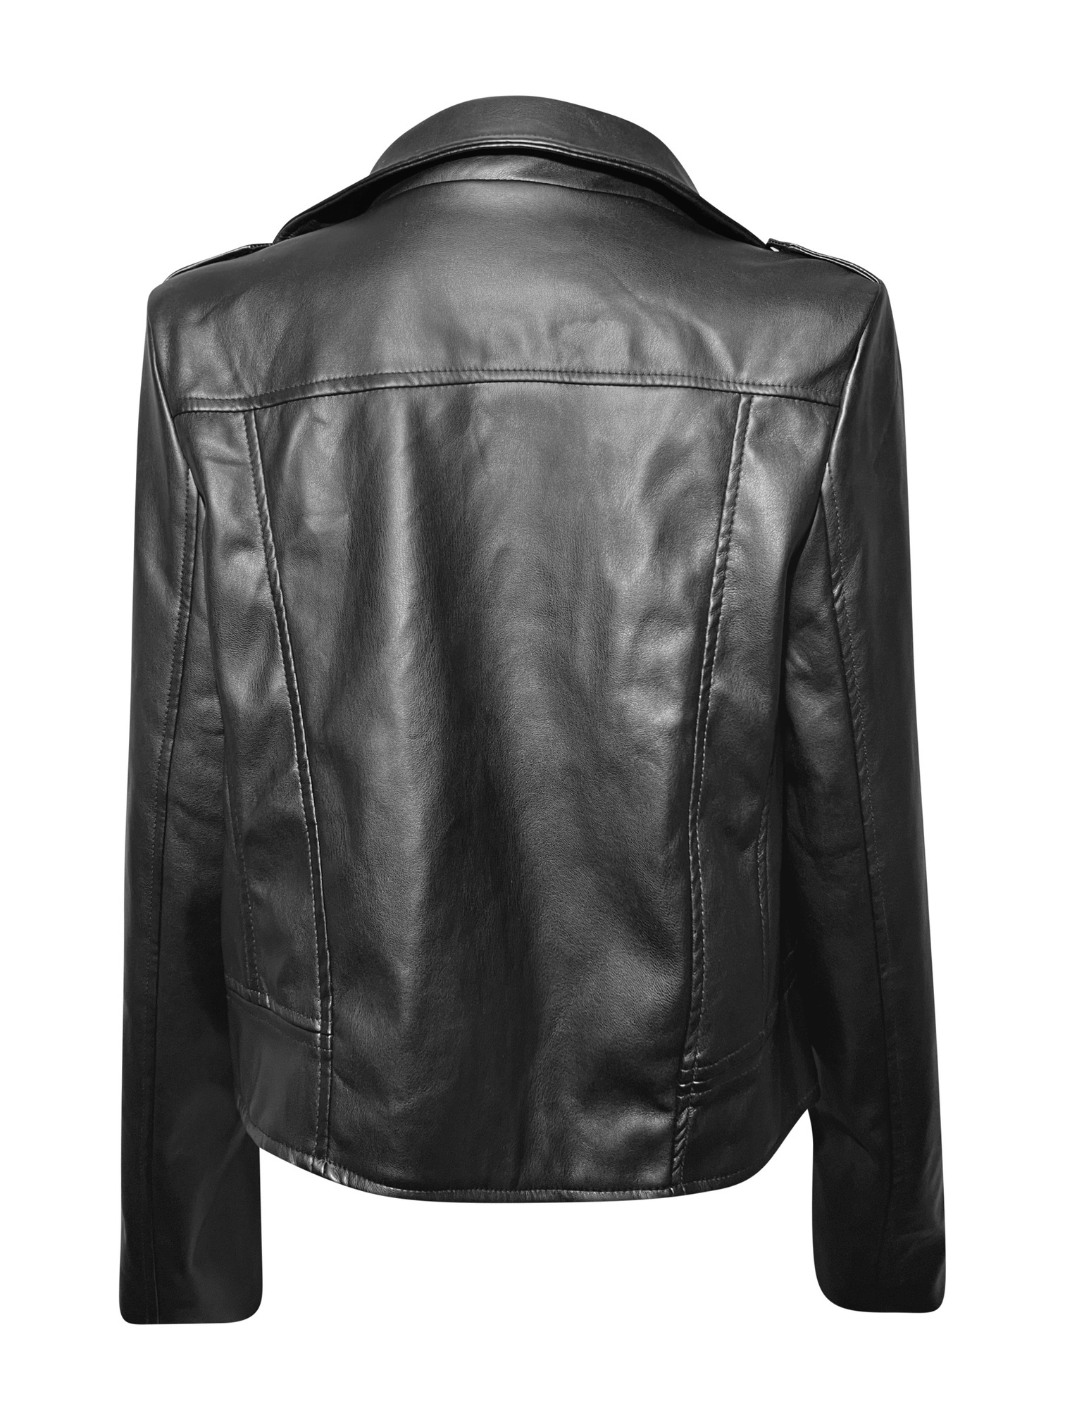 Women's Faux Leather Jacket | Black Faux Leather Jacket | Tiana Bay